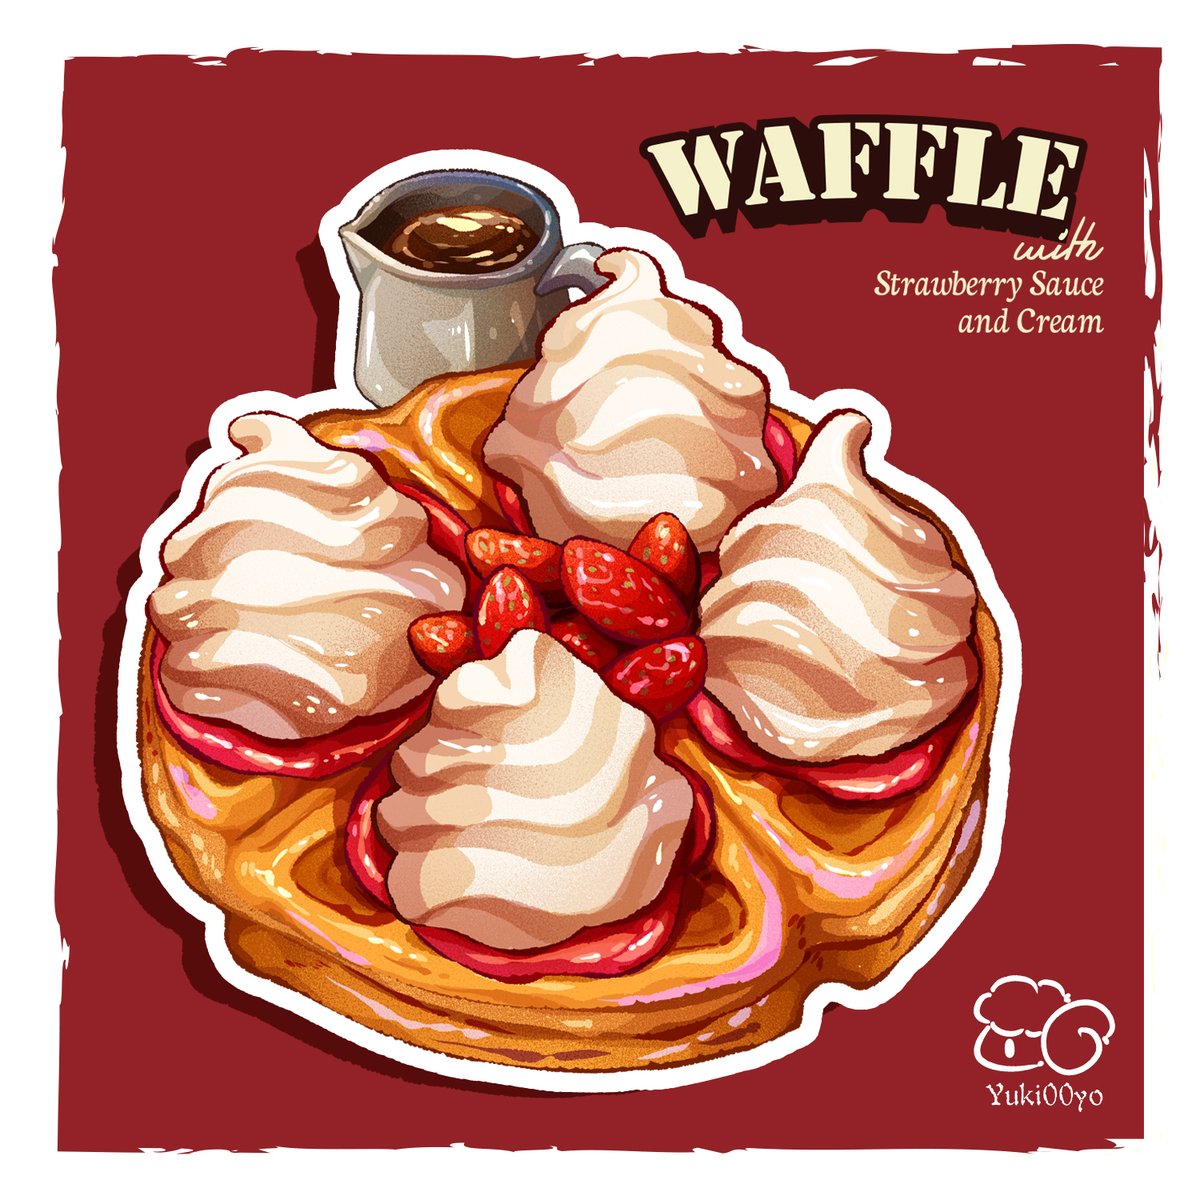 Waffle with Strawberry Sauce and Cream 🧇

🌟 American Diner is pre-order in Pinkoi, Pls check in bio 🌟

==============
#foodart #foodillustration
#foodartist
#illustration #絵 #イラスト #dessert
#食べ物イラスト
#Waffle #ワッフル #鬆餅
#50sdiner #AmericanDiner
#foodplanet